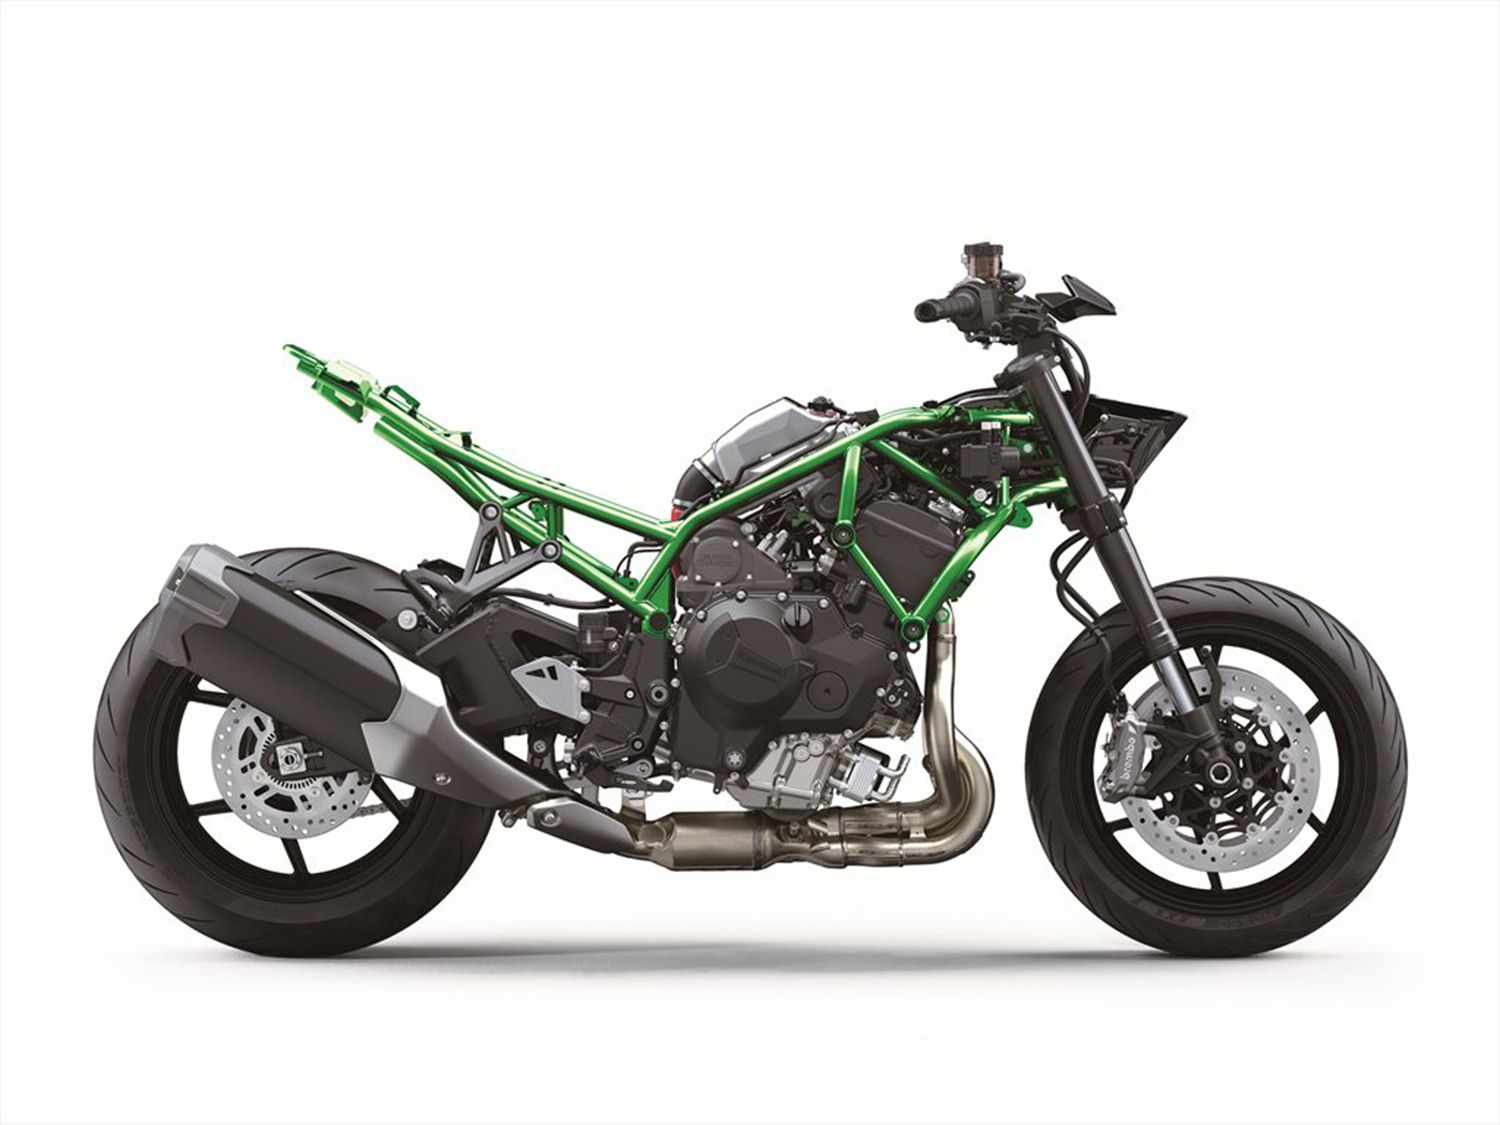 2020 Kawasaki Z H2 Supercharged Announced | Cycle